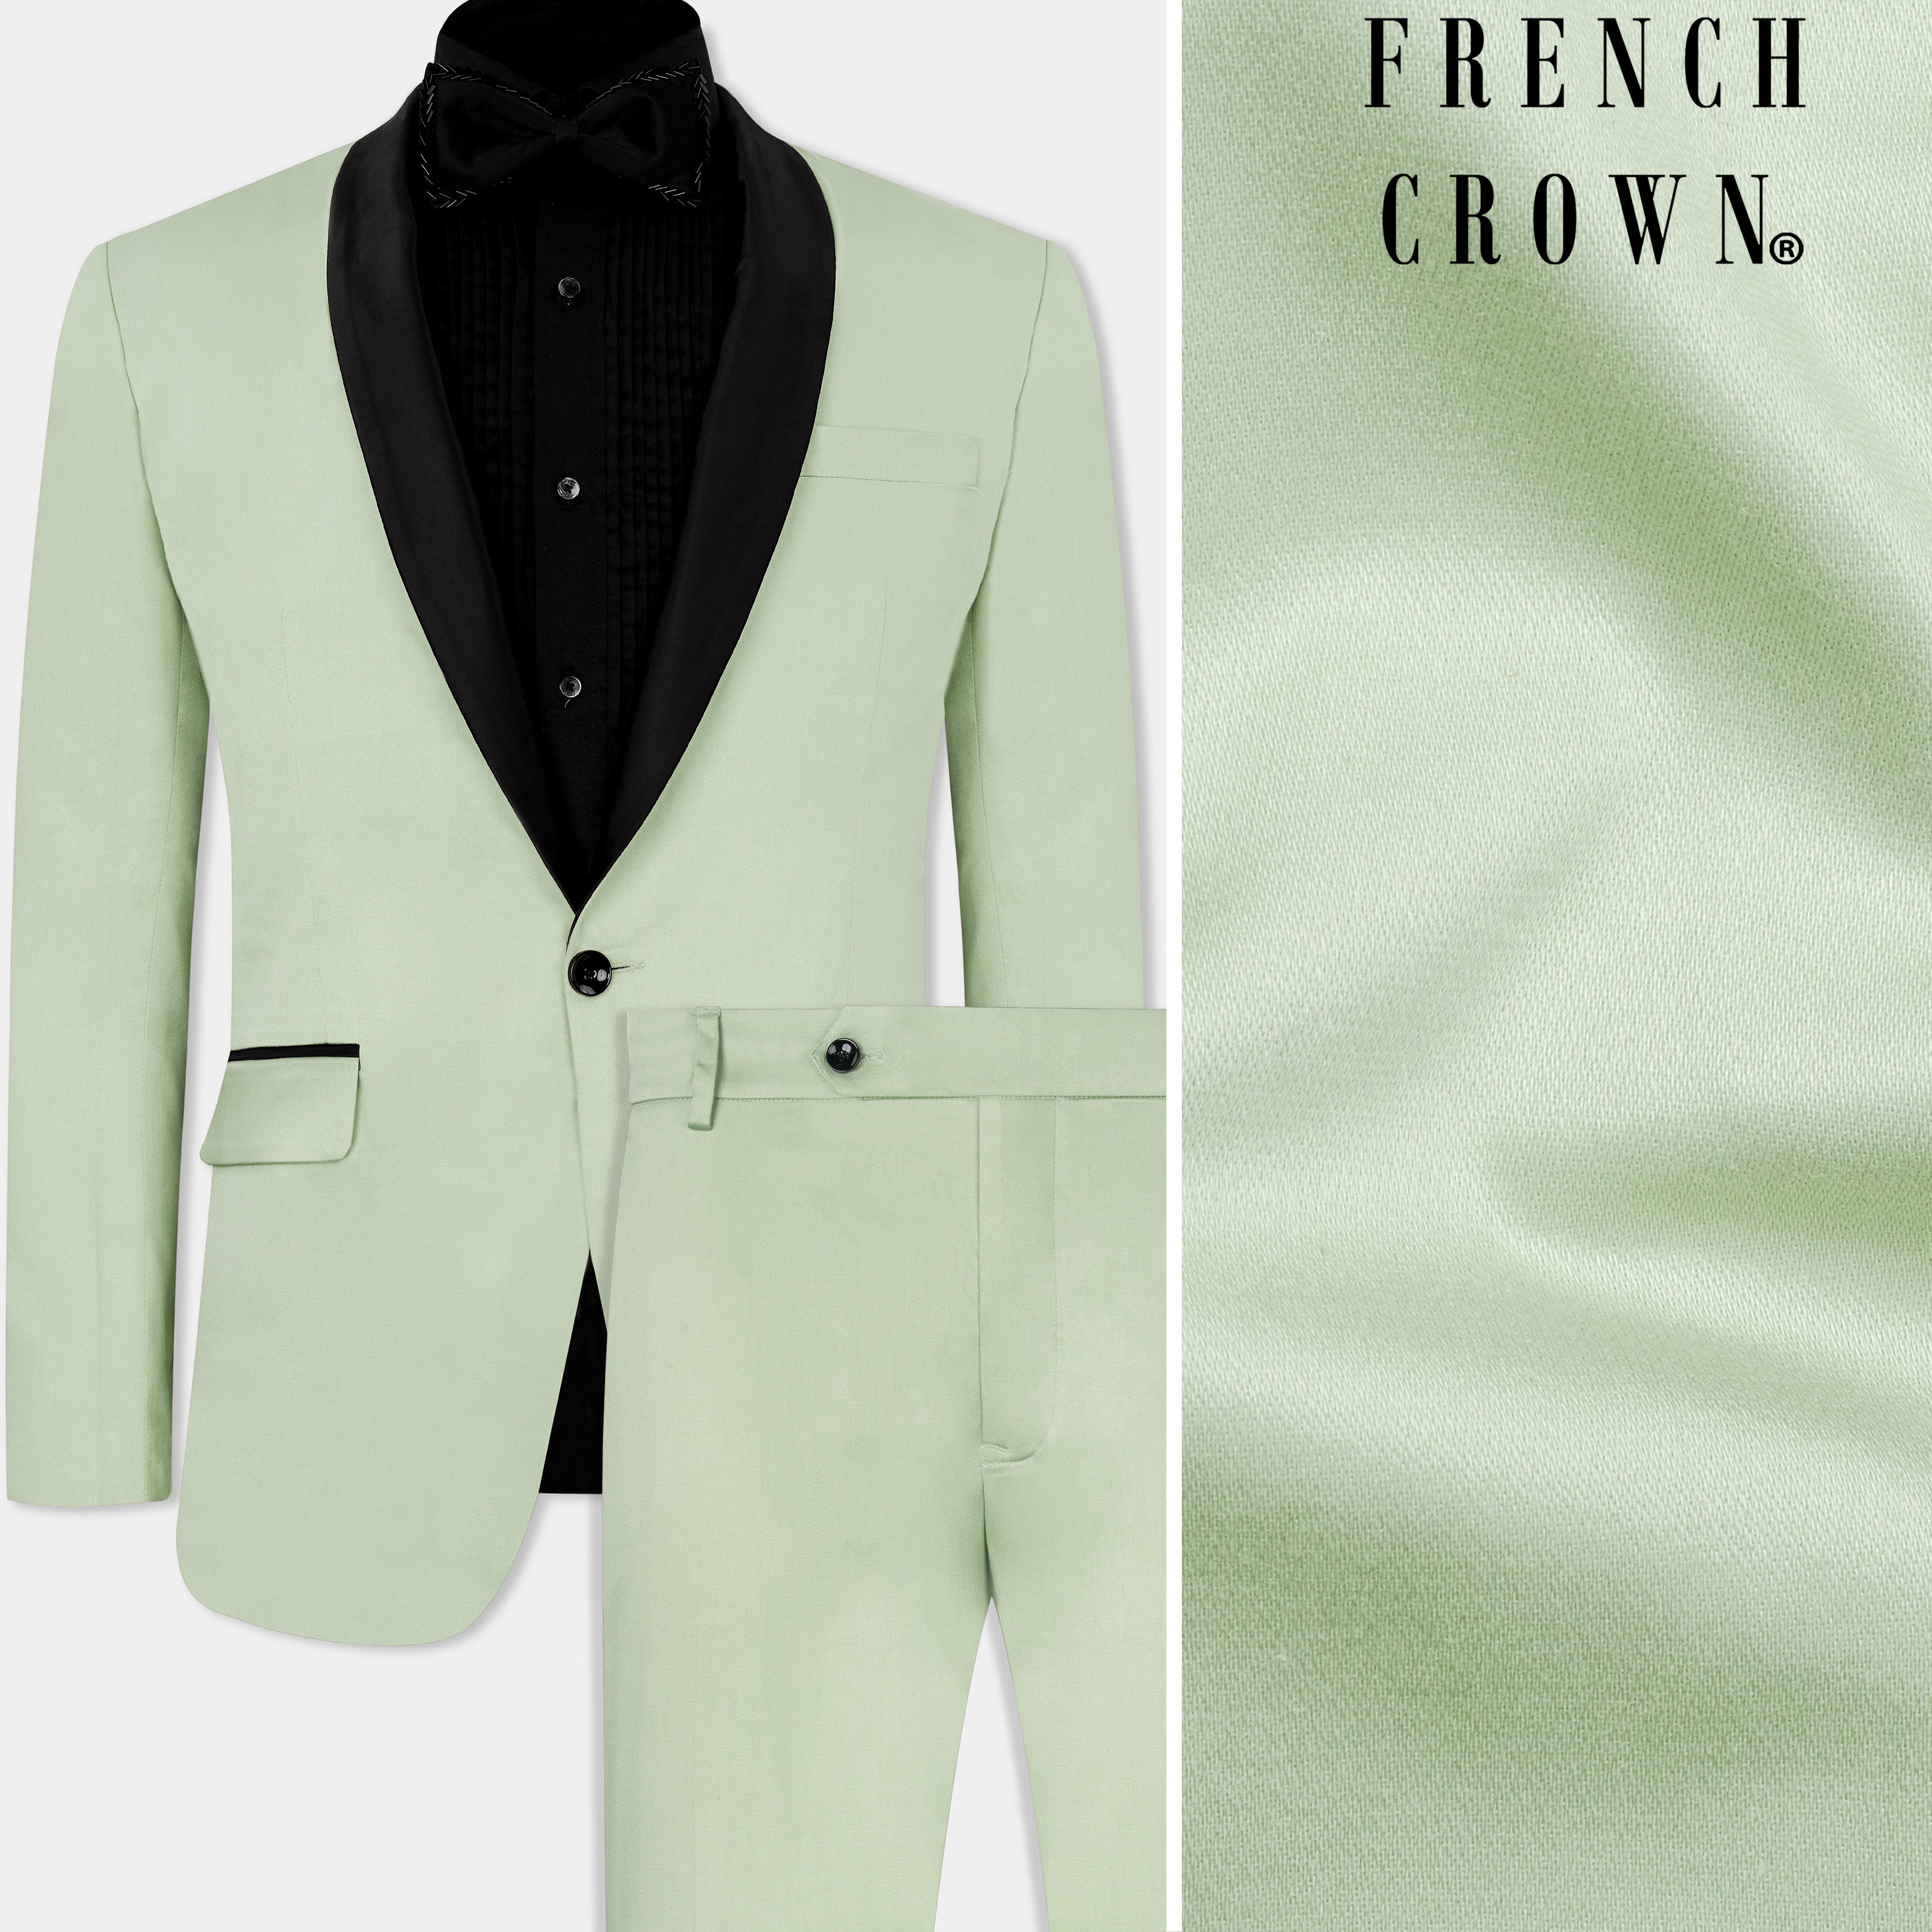 Stitch & Tie Green Stretch Suit Separates Wedding Tuxedo